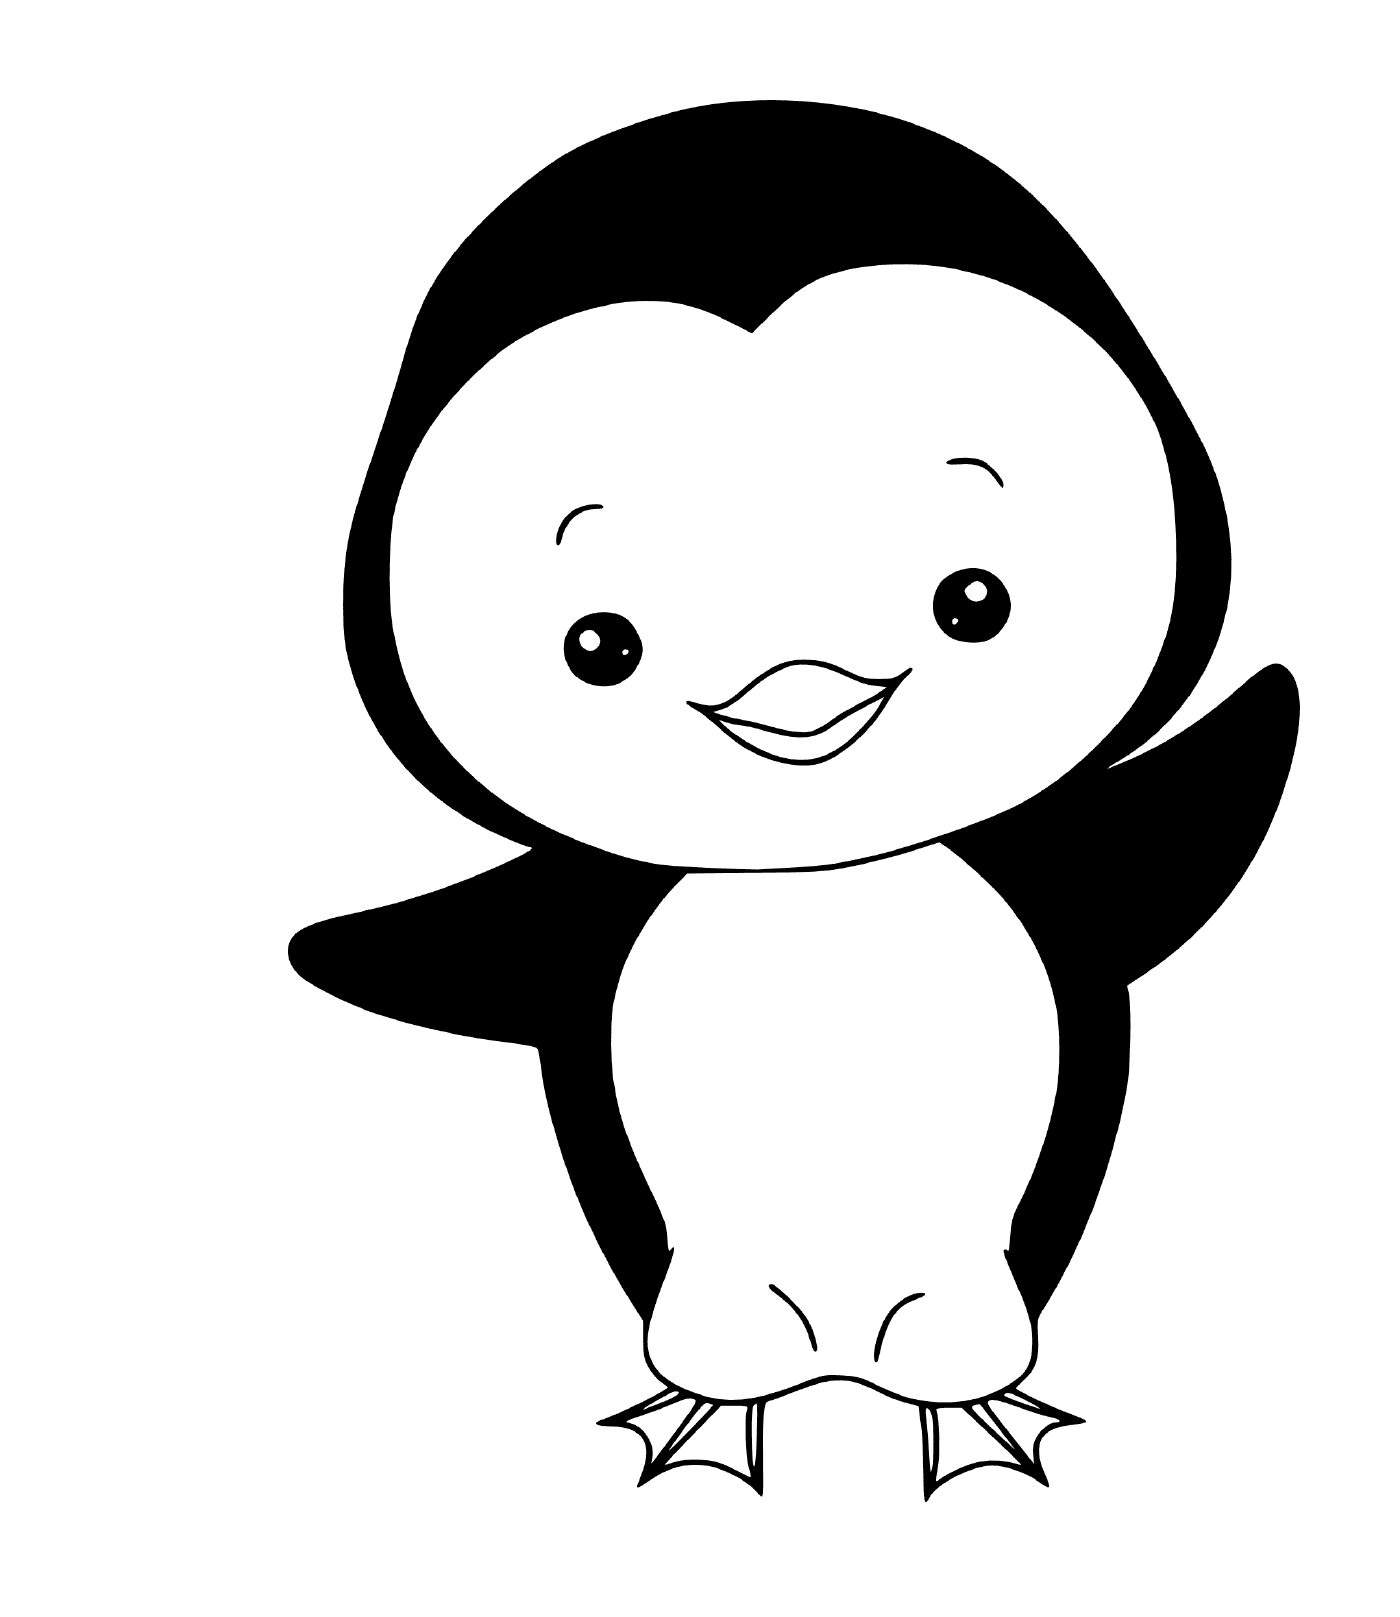  Pingüino fácil de dibujar 